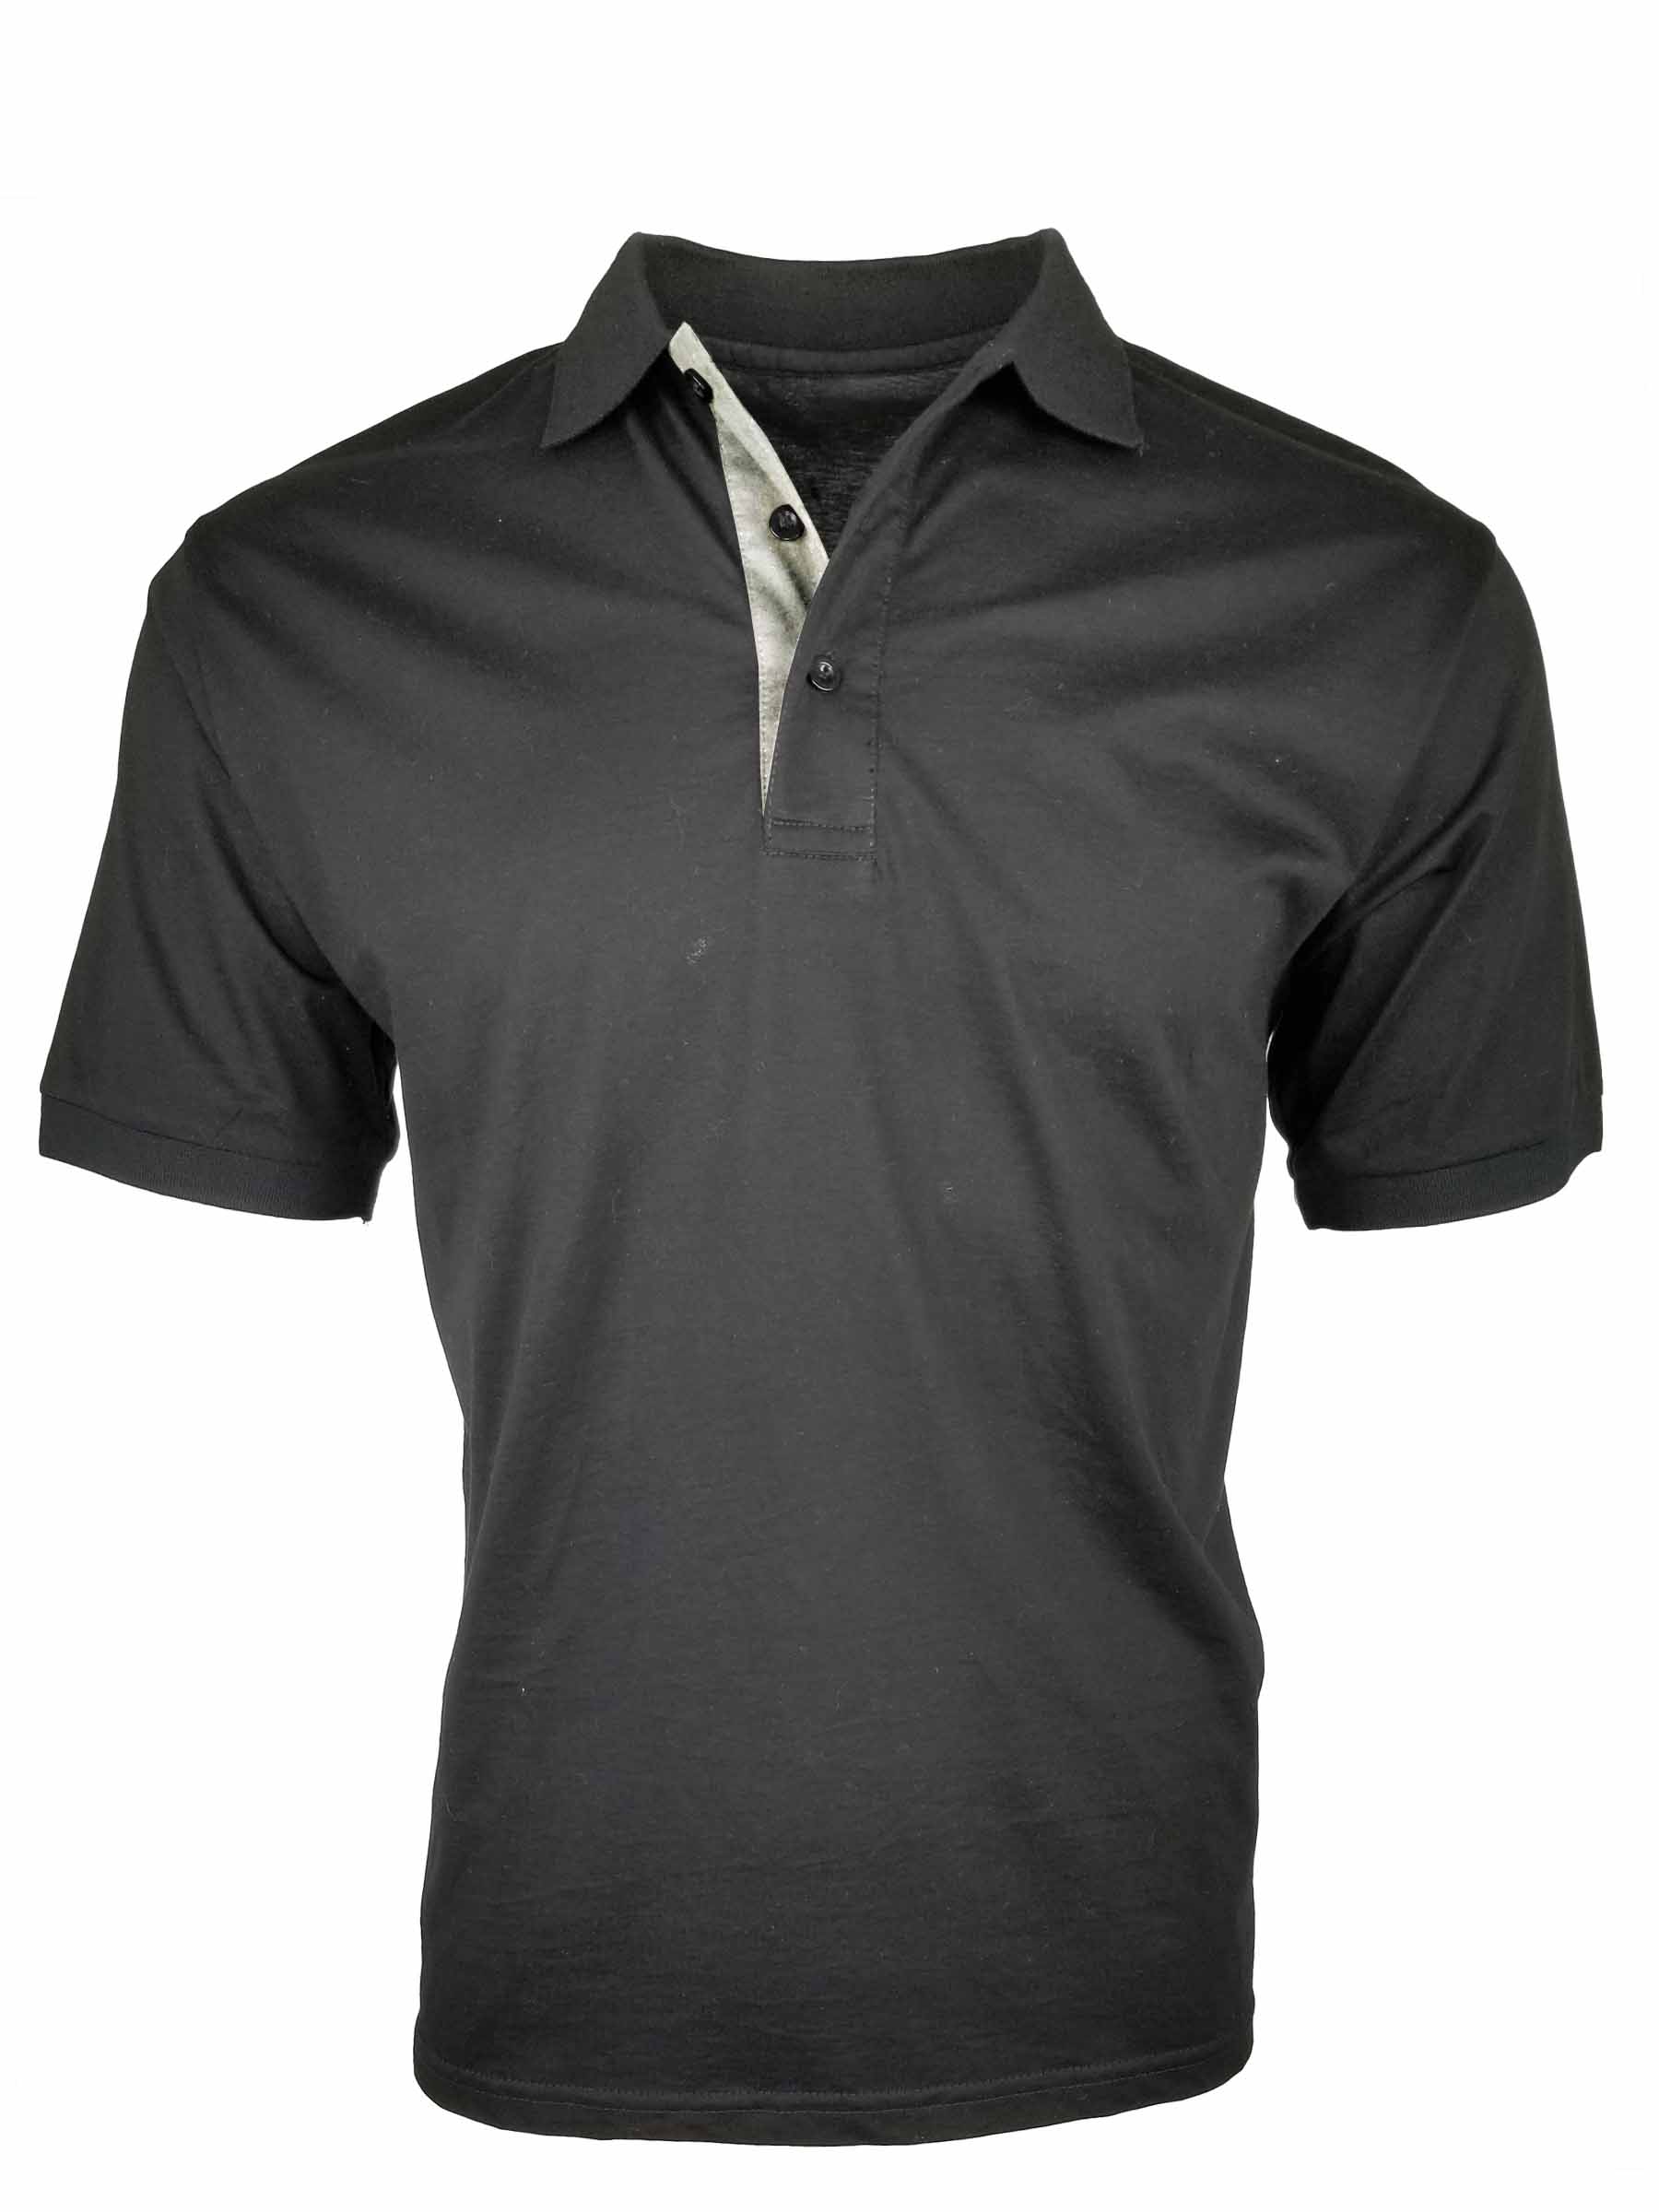 Men's Contrast Mercerized Polo - Black - Uniform Edit